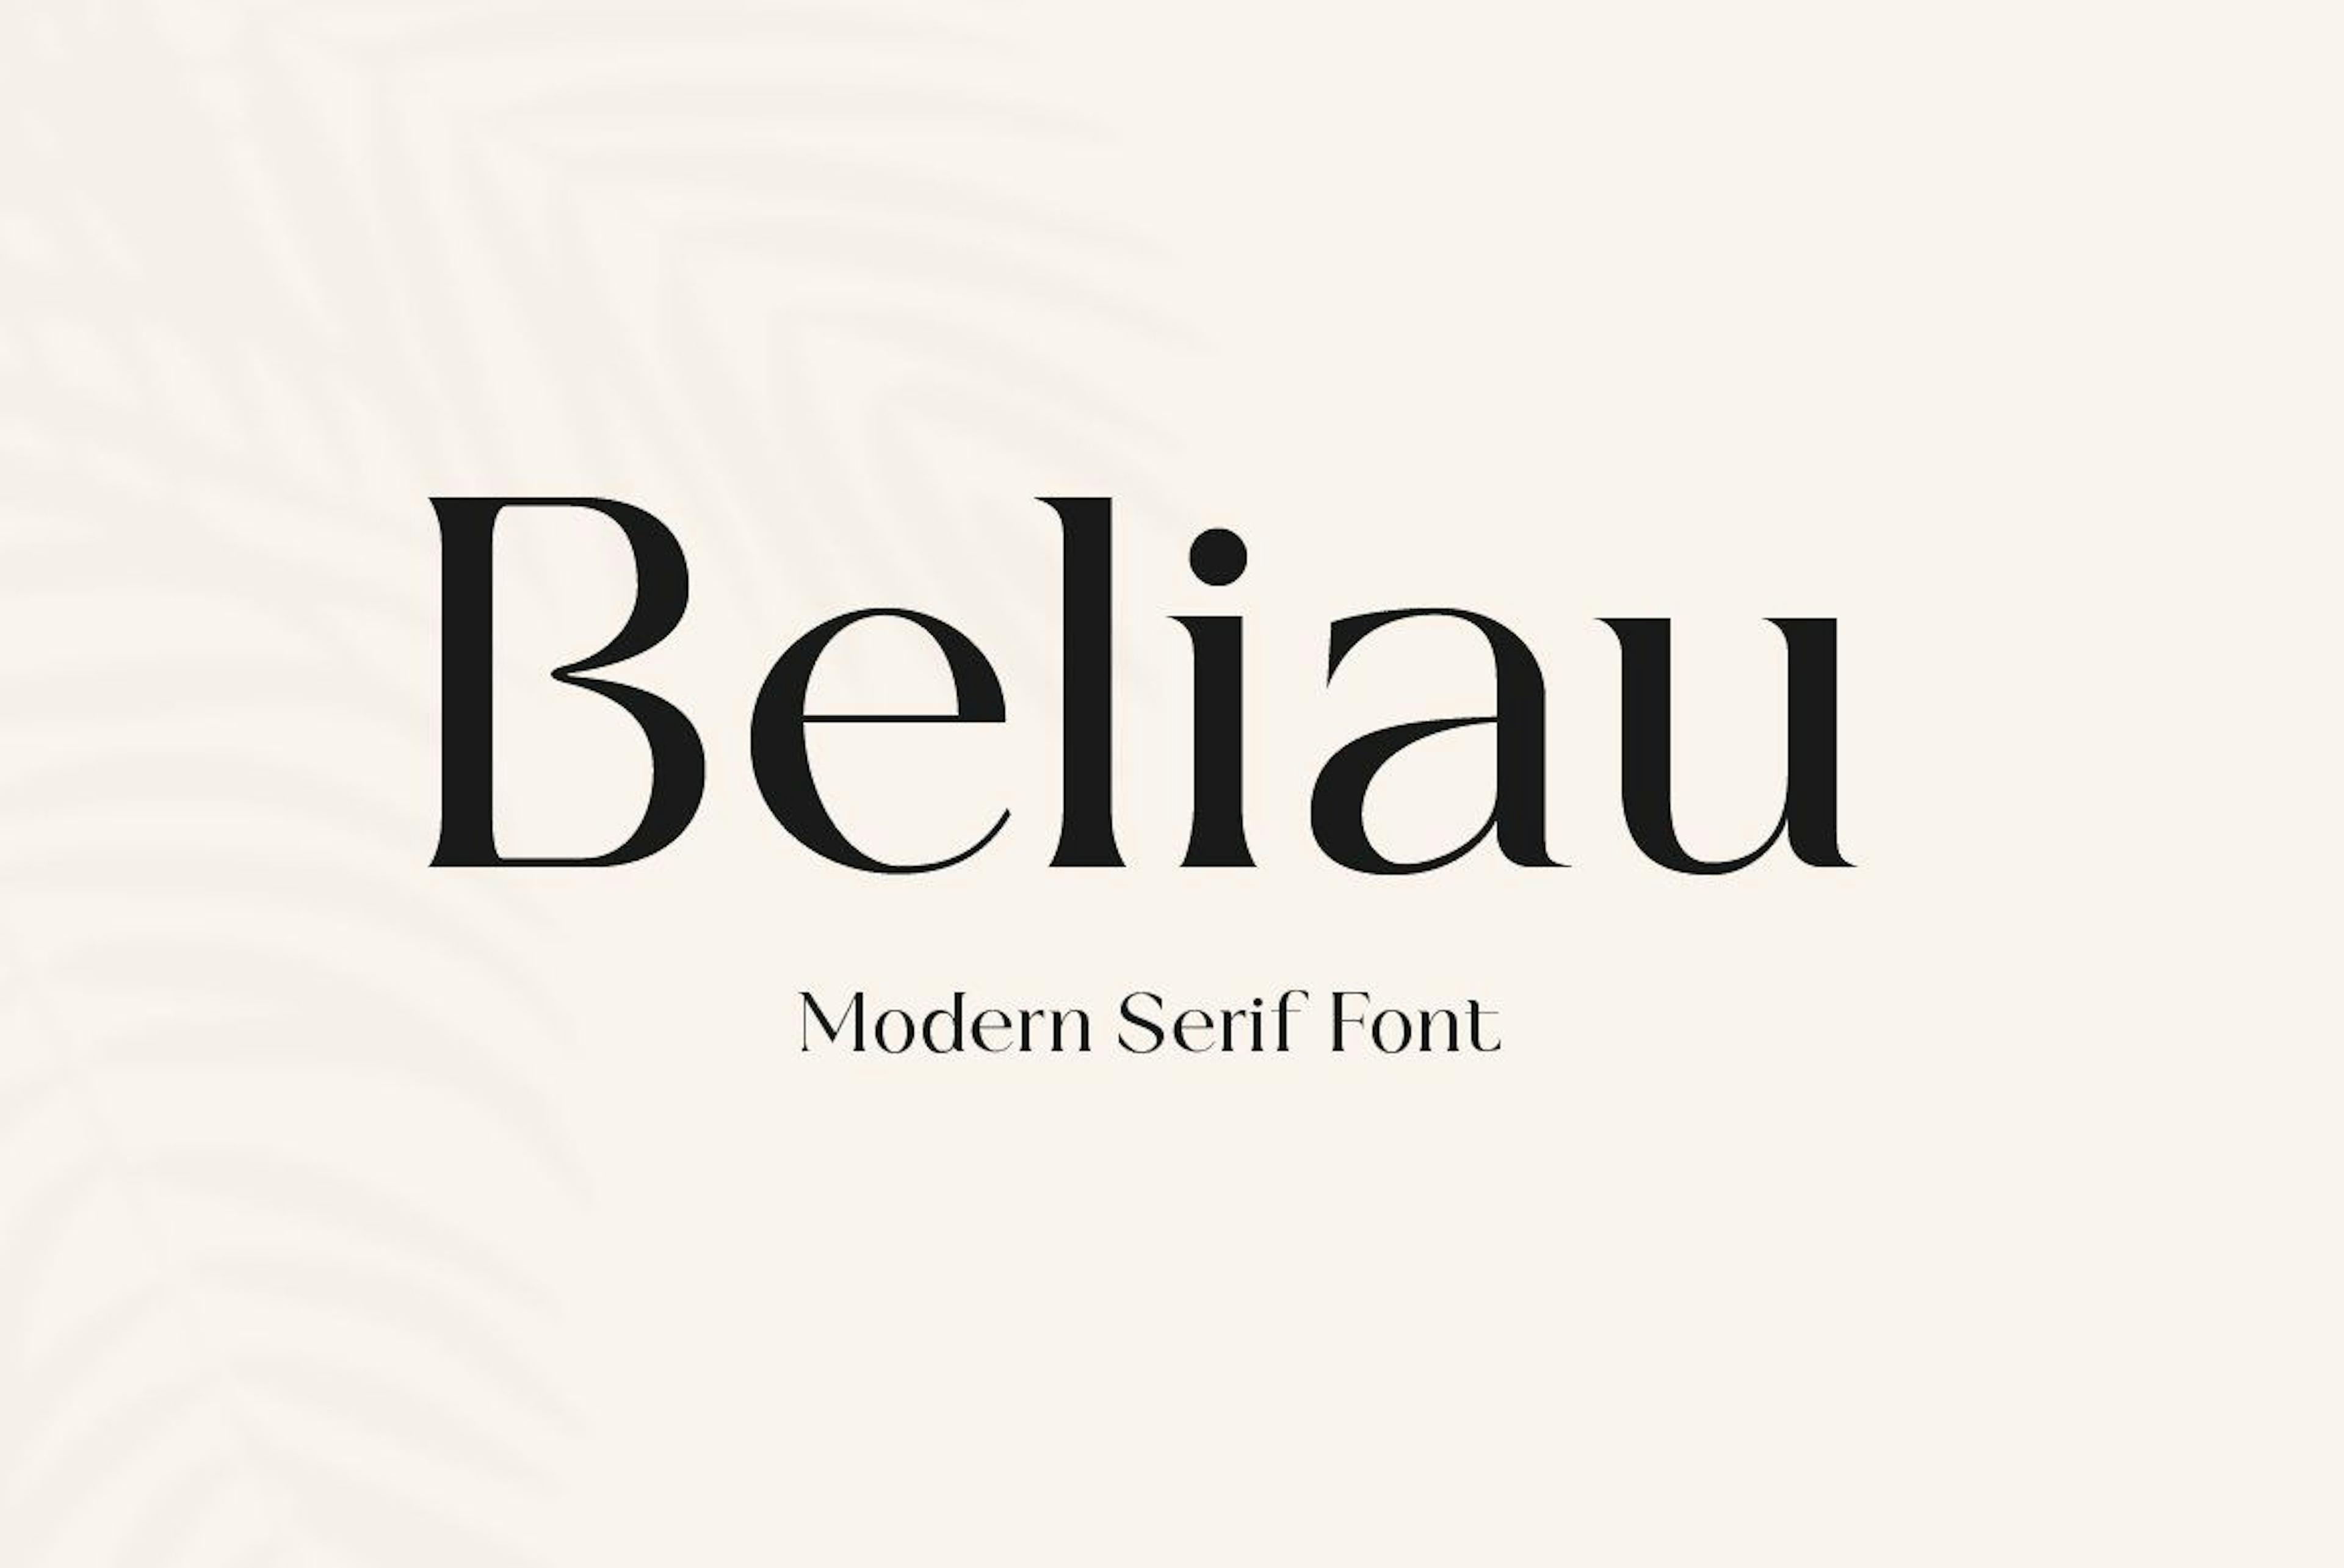 Modern logo with Serif font